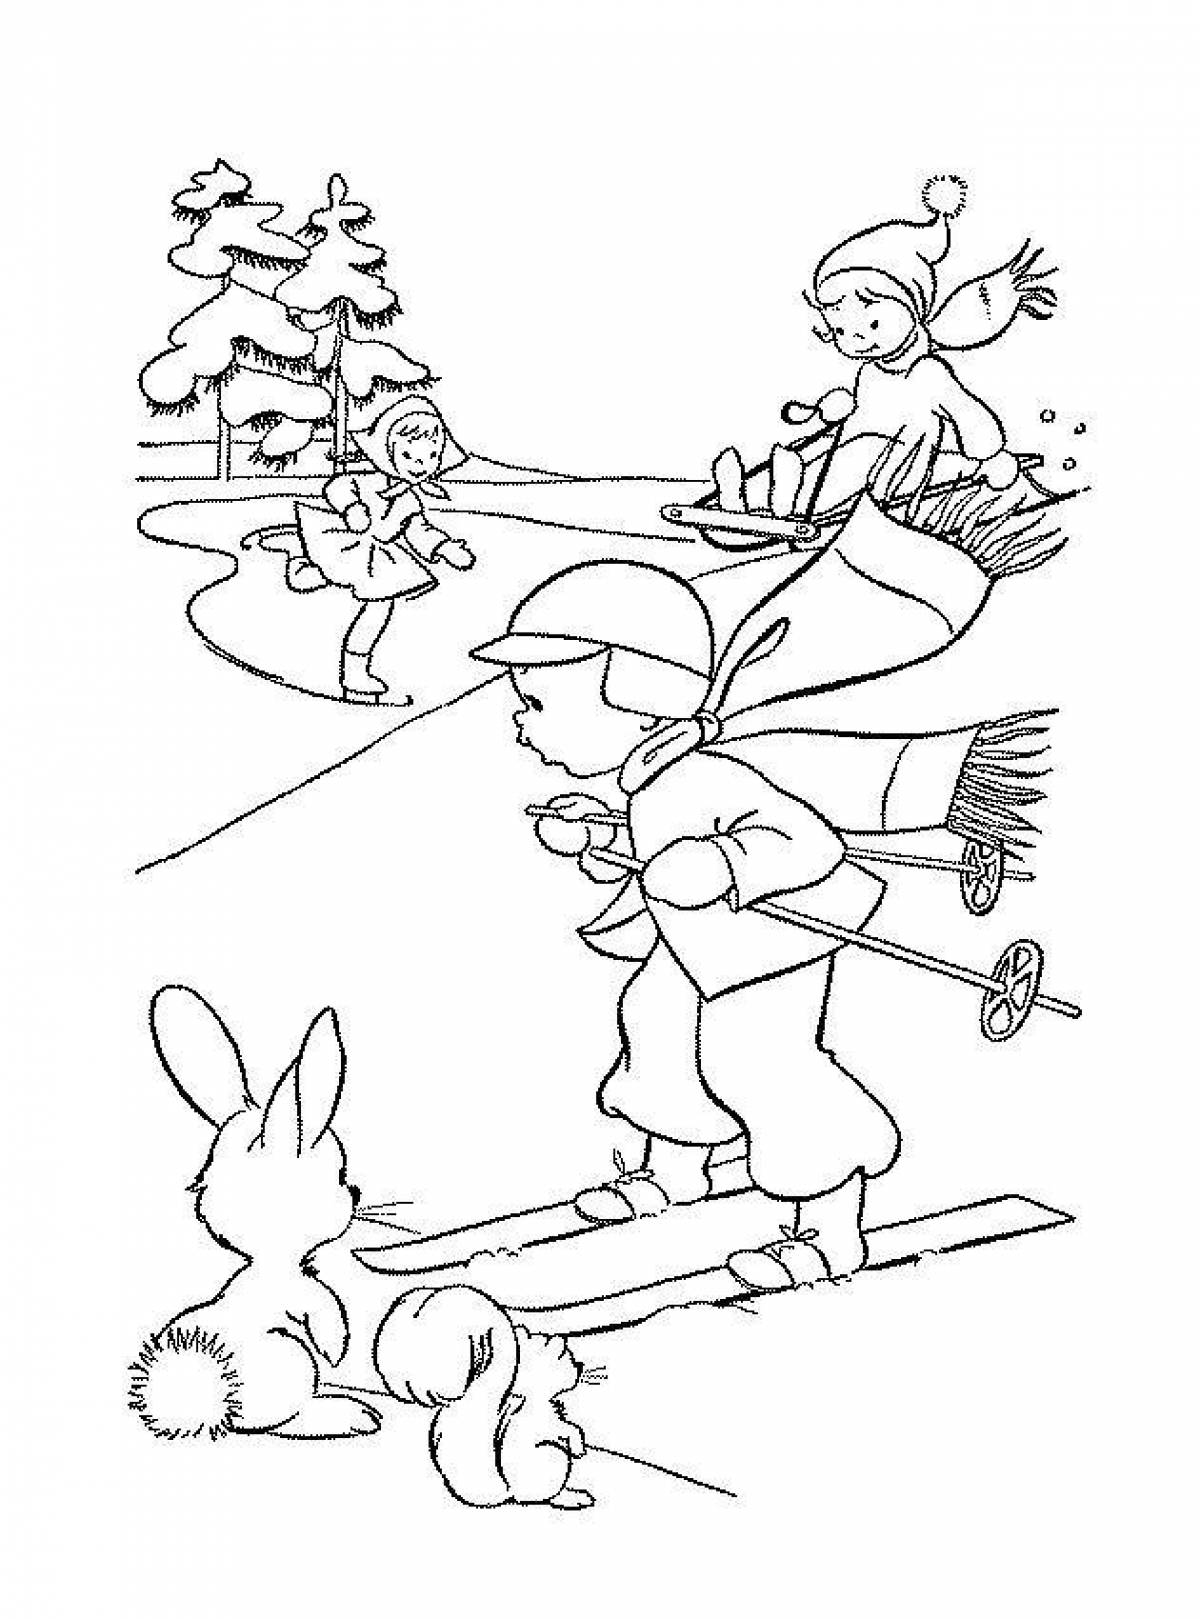 Violent coloring drawing of winter fun